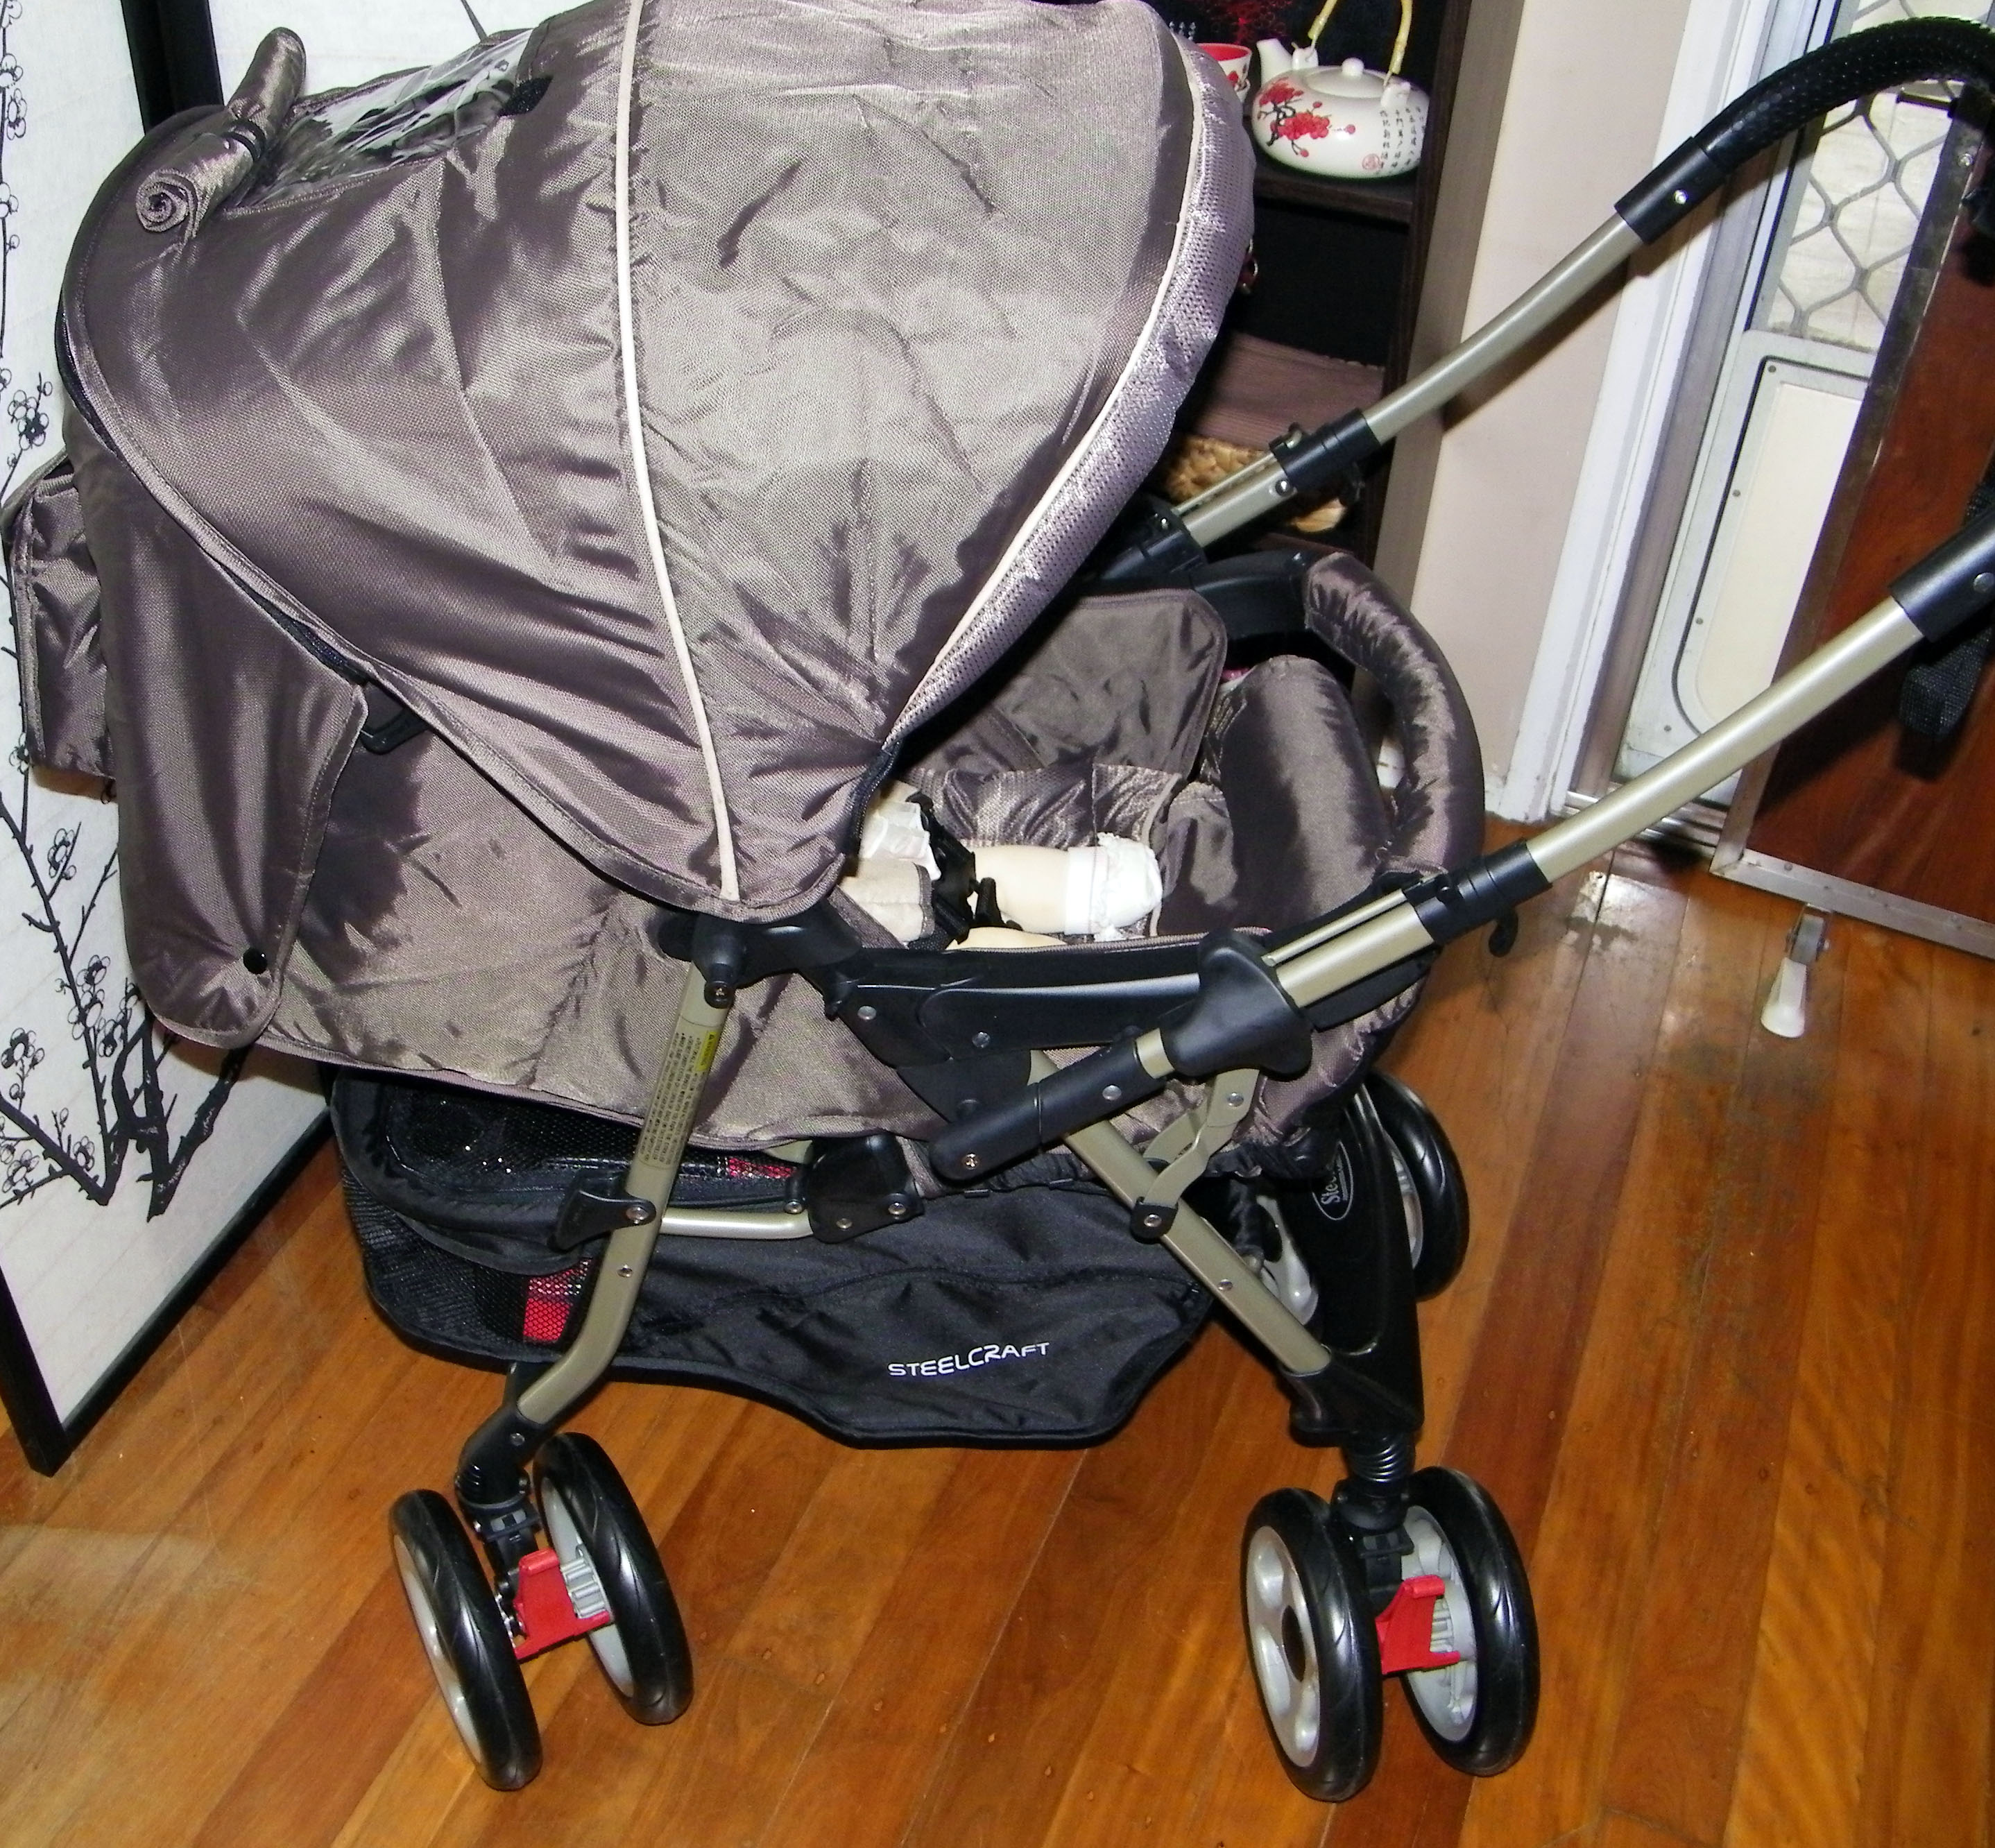 steelcraft acclaim reverse handle stroller